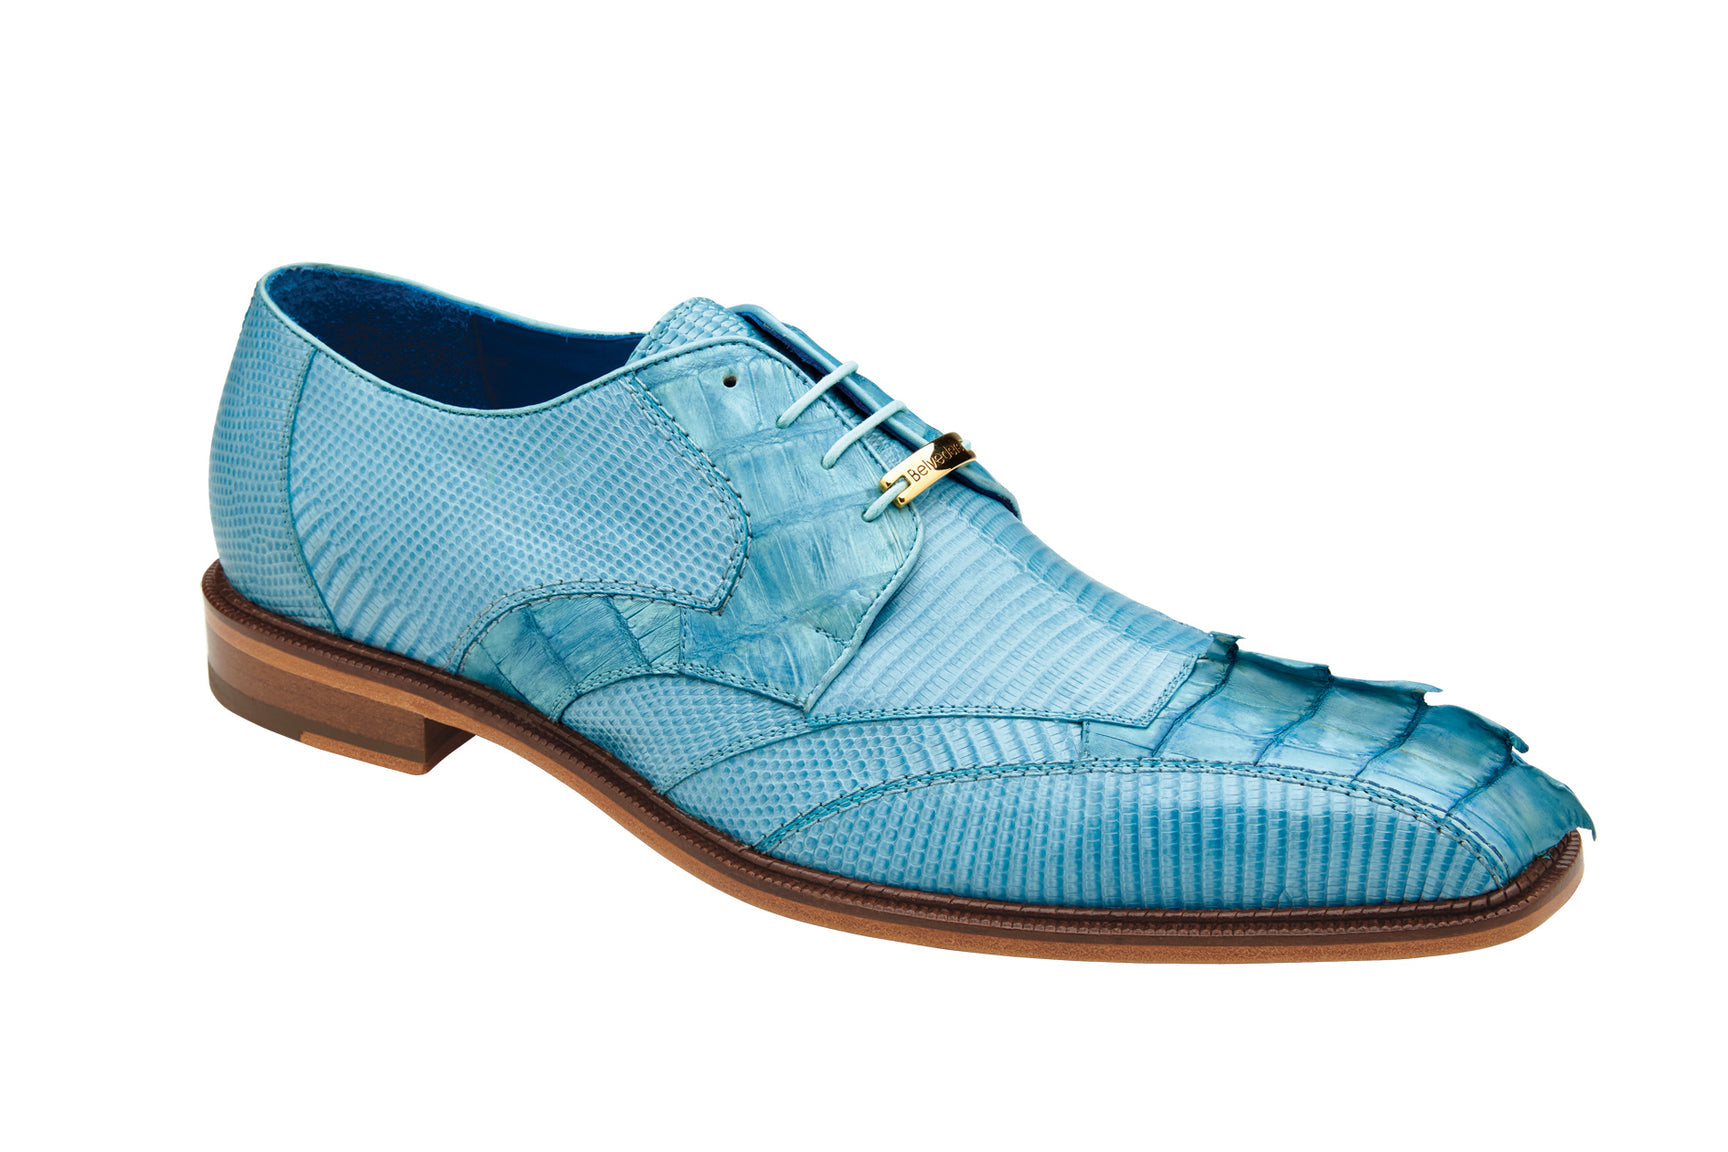 Belvedere - Valter, Genuine Caiman Crocodile and Lizard Dress Shoe - Summer Blue - 1480